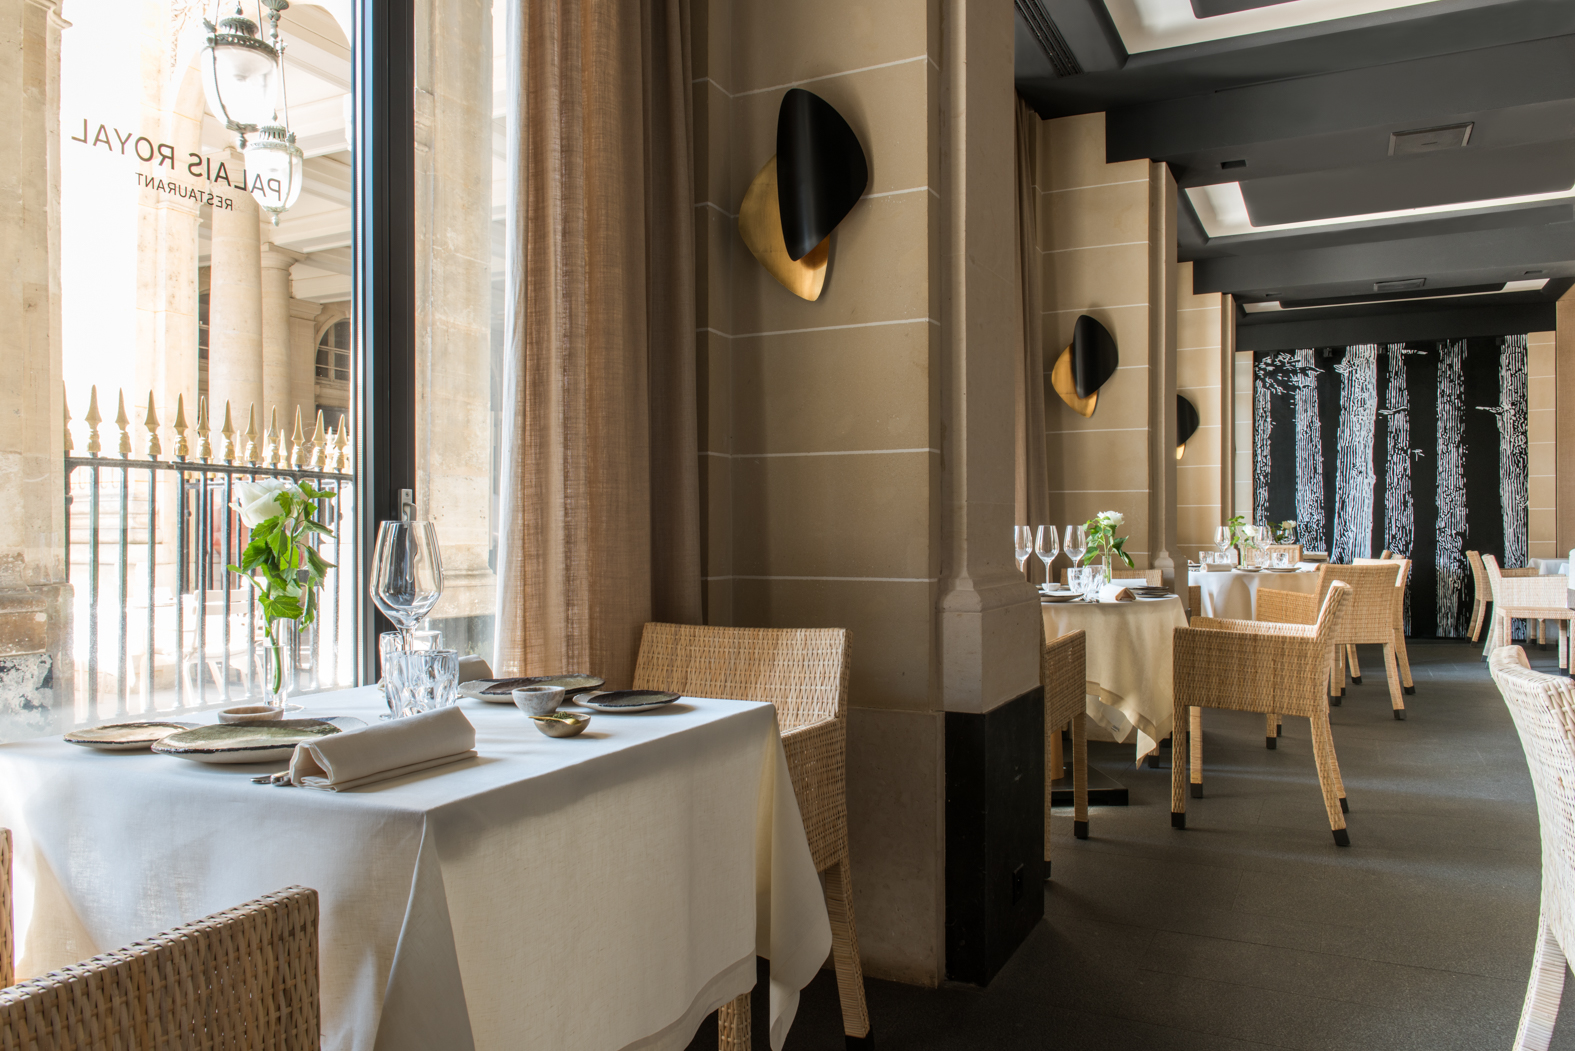 Palais Royal Restaurant in Paris - Restaurant Reviews, Menu and Prices